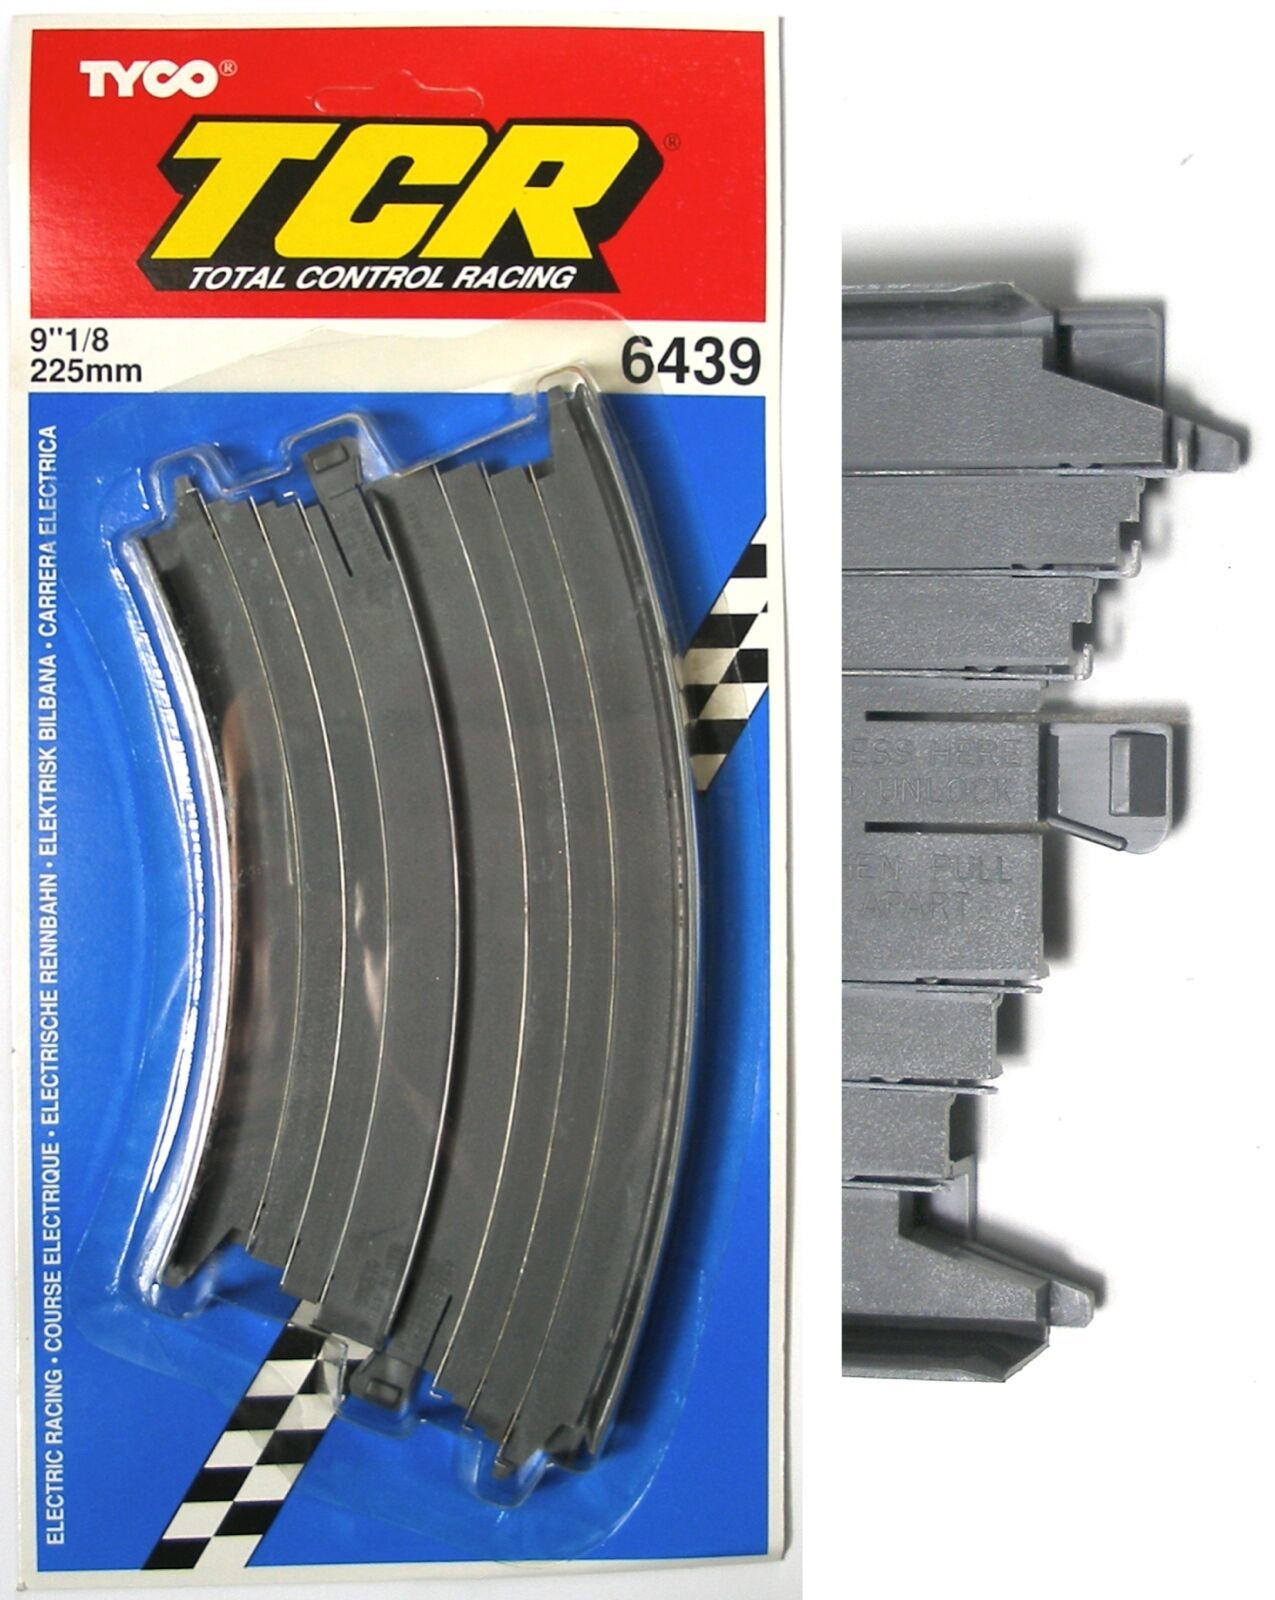 1 1991 TYCO TCR Slotless HO Slot Car Track 1/8 radius 9" CURVE Sealed Card #6439 - $6.99